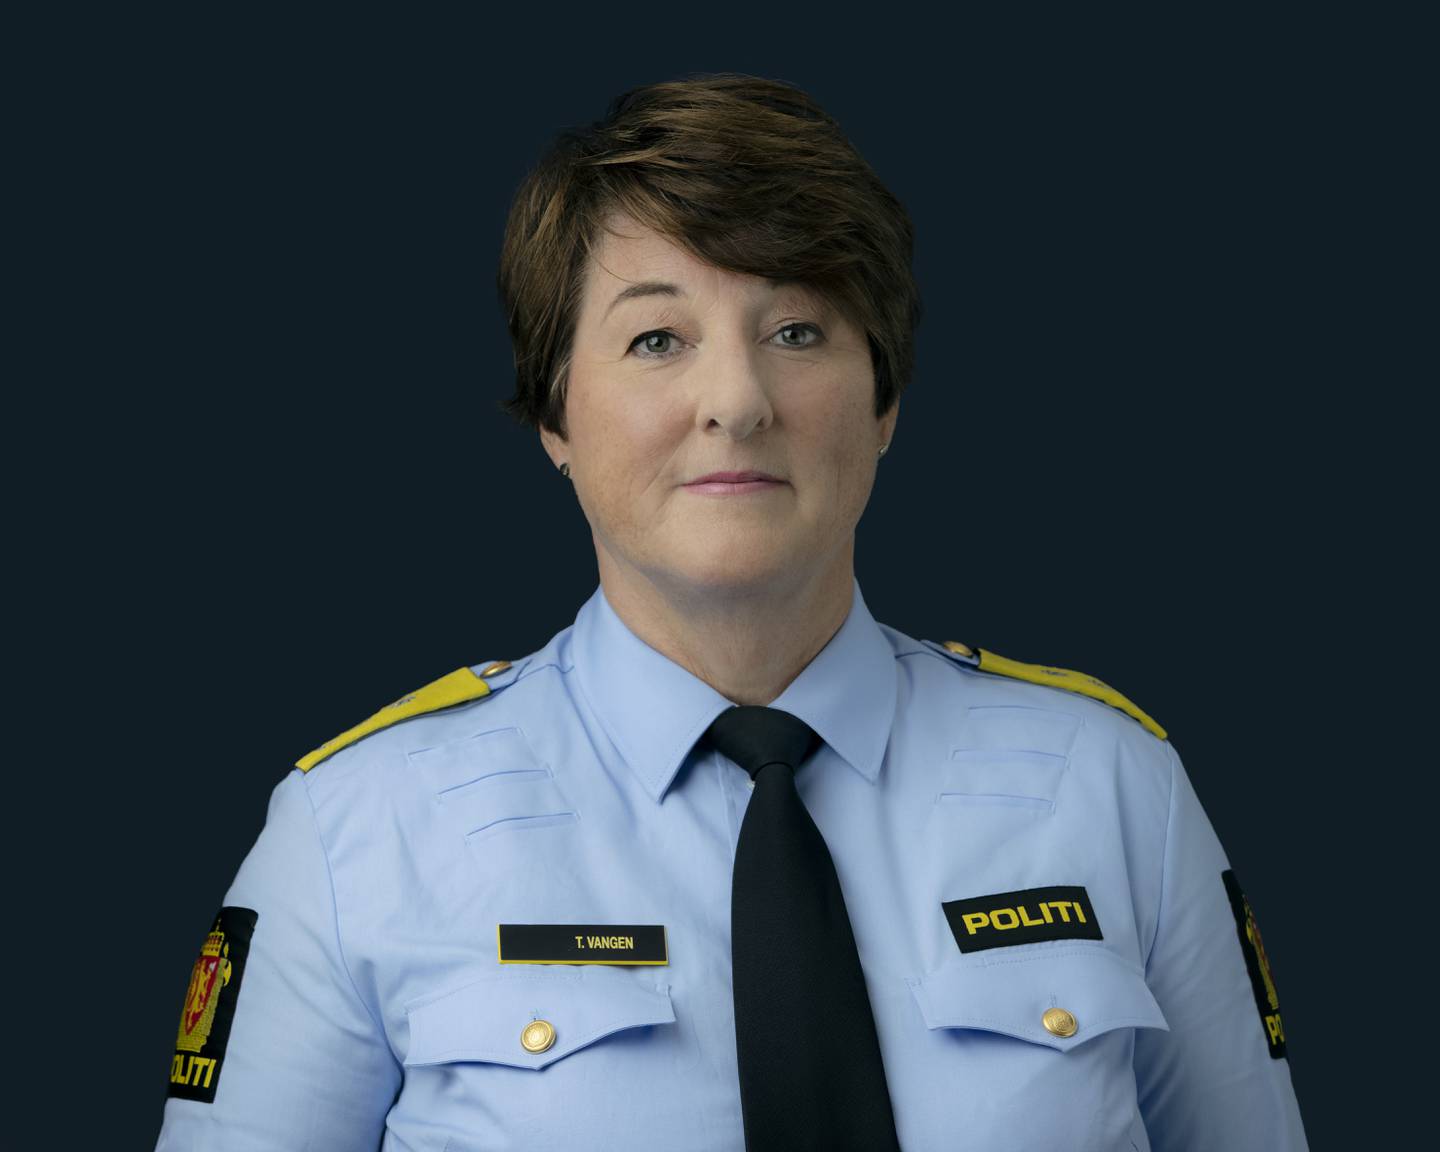 Beredskapsdirektør Tone Vangen i Politidirektoratet.